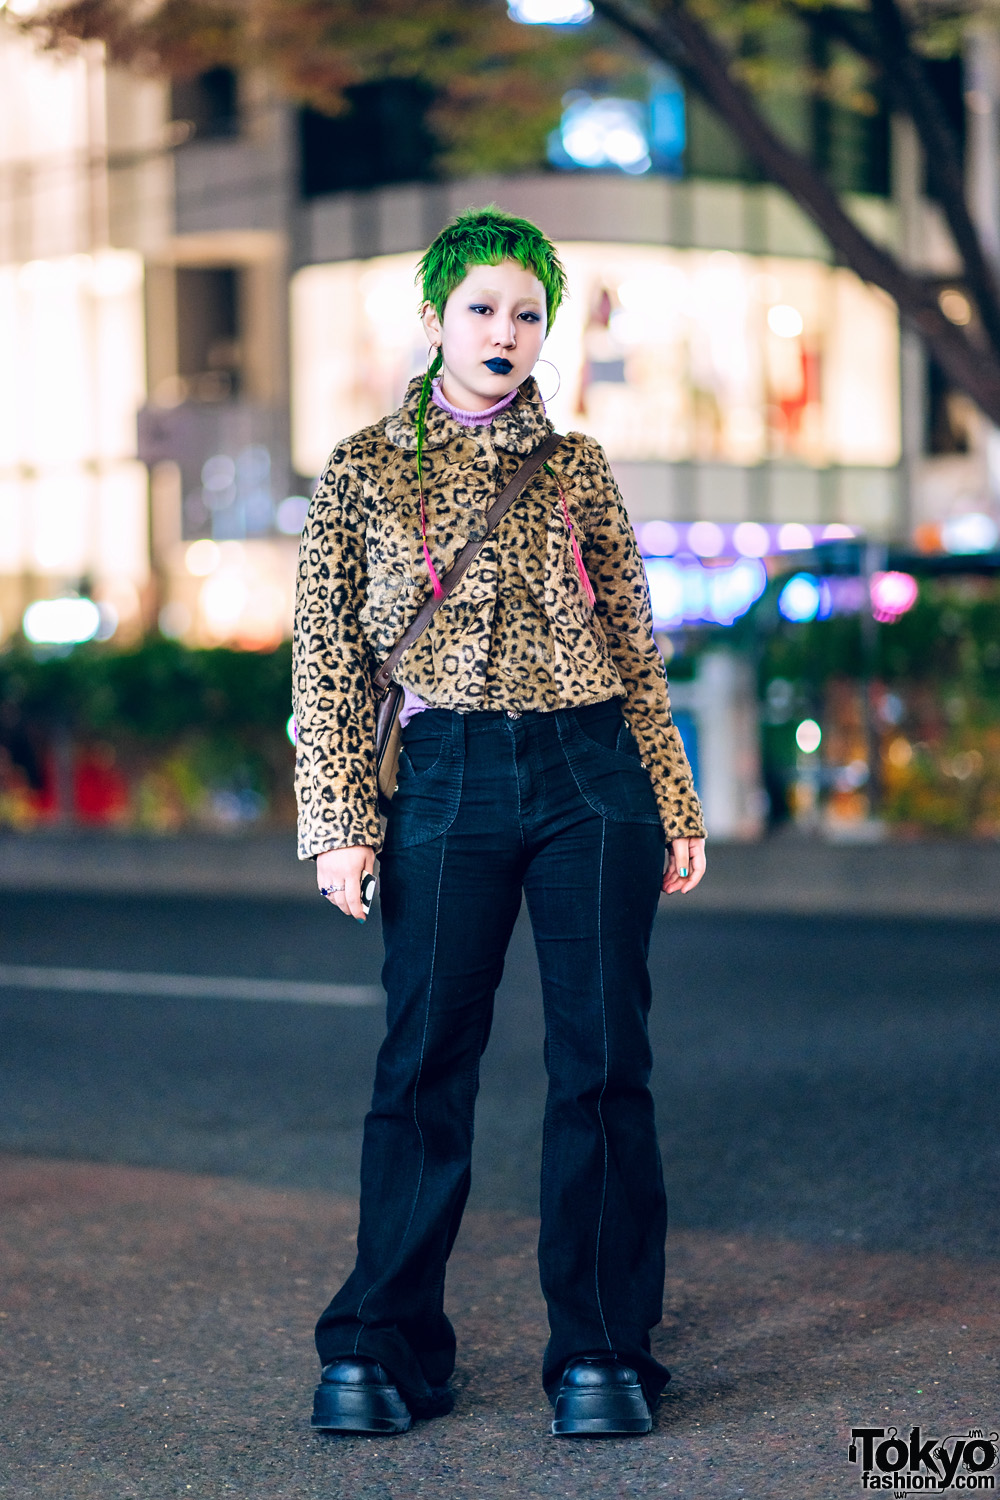 Tokyo Vintage Streetwear Style w/ Green Pixie Hair & Braided Tails, Furry Leopard Jacket, Dark Denims, Demonia Platforms & Burberry Crossbody Bag